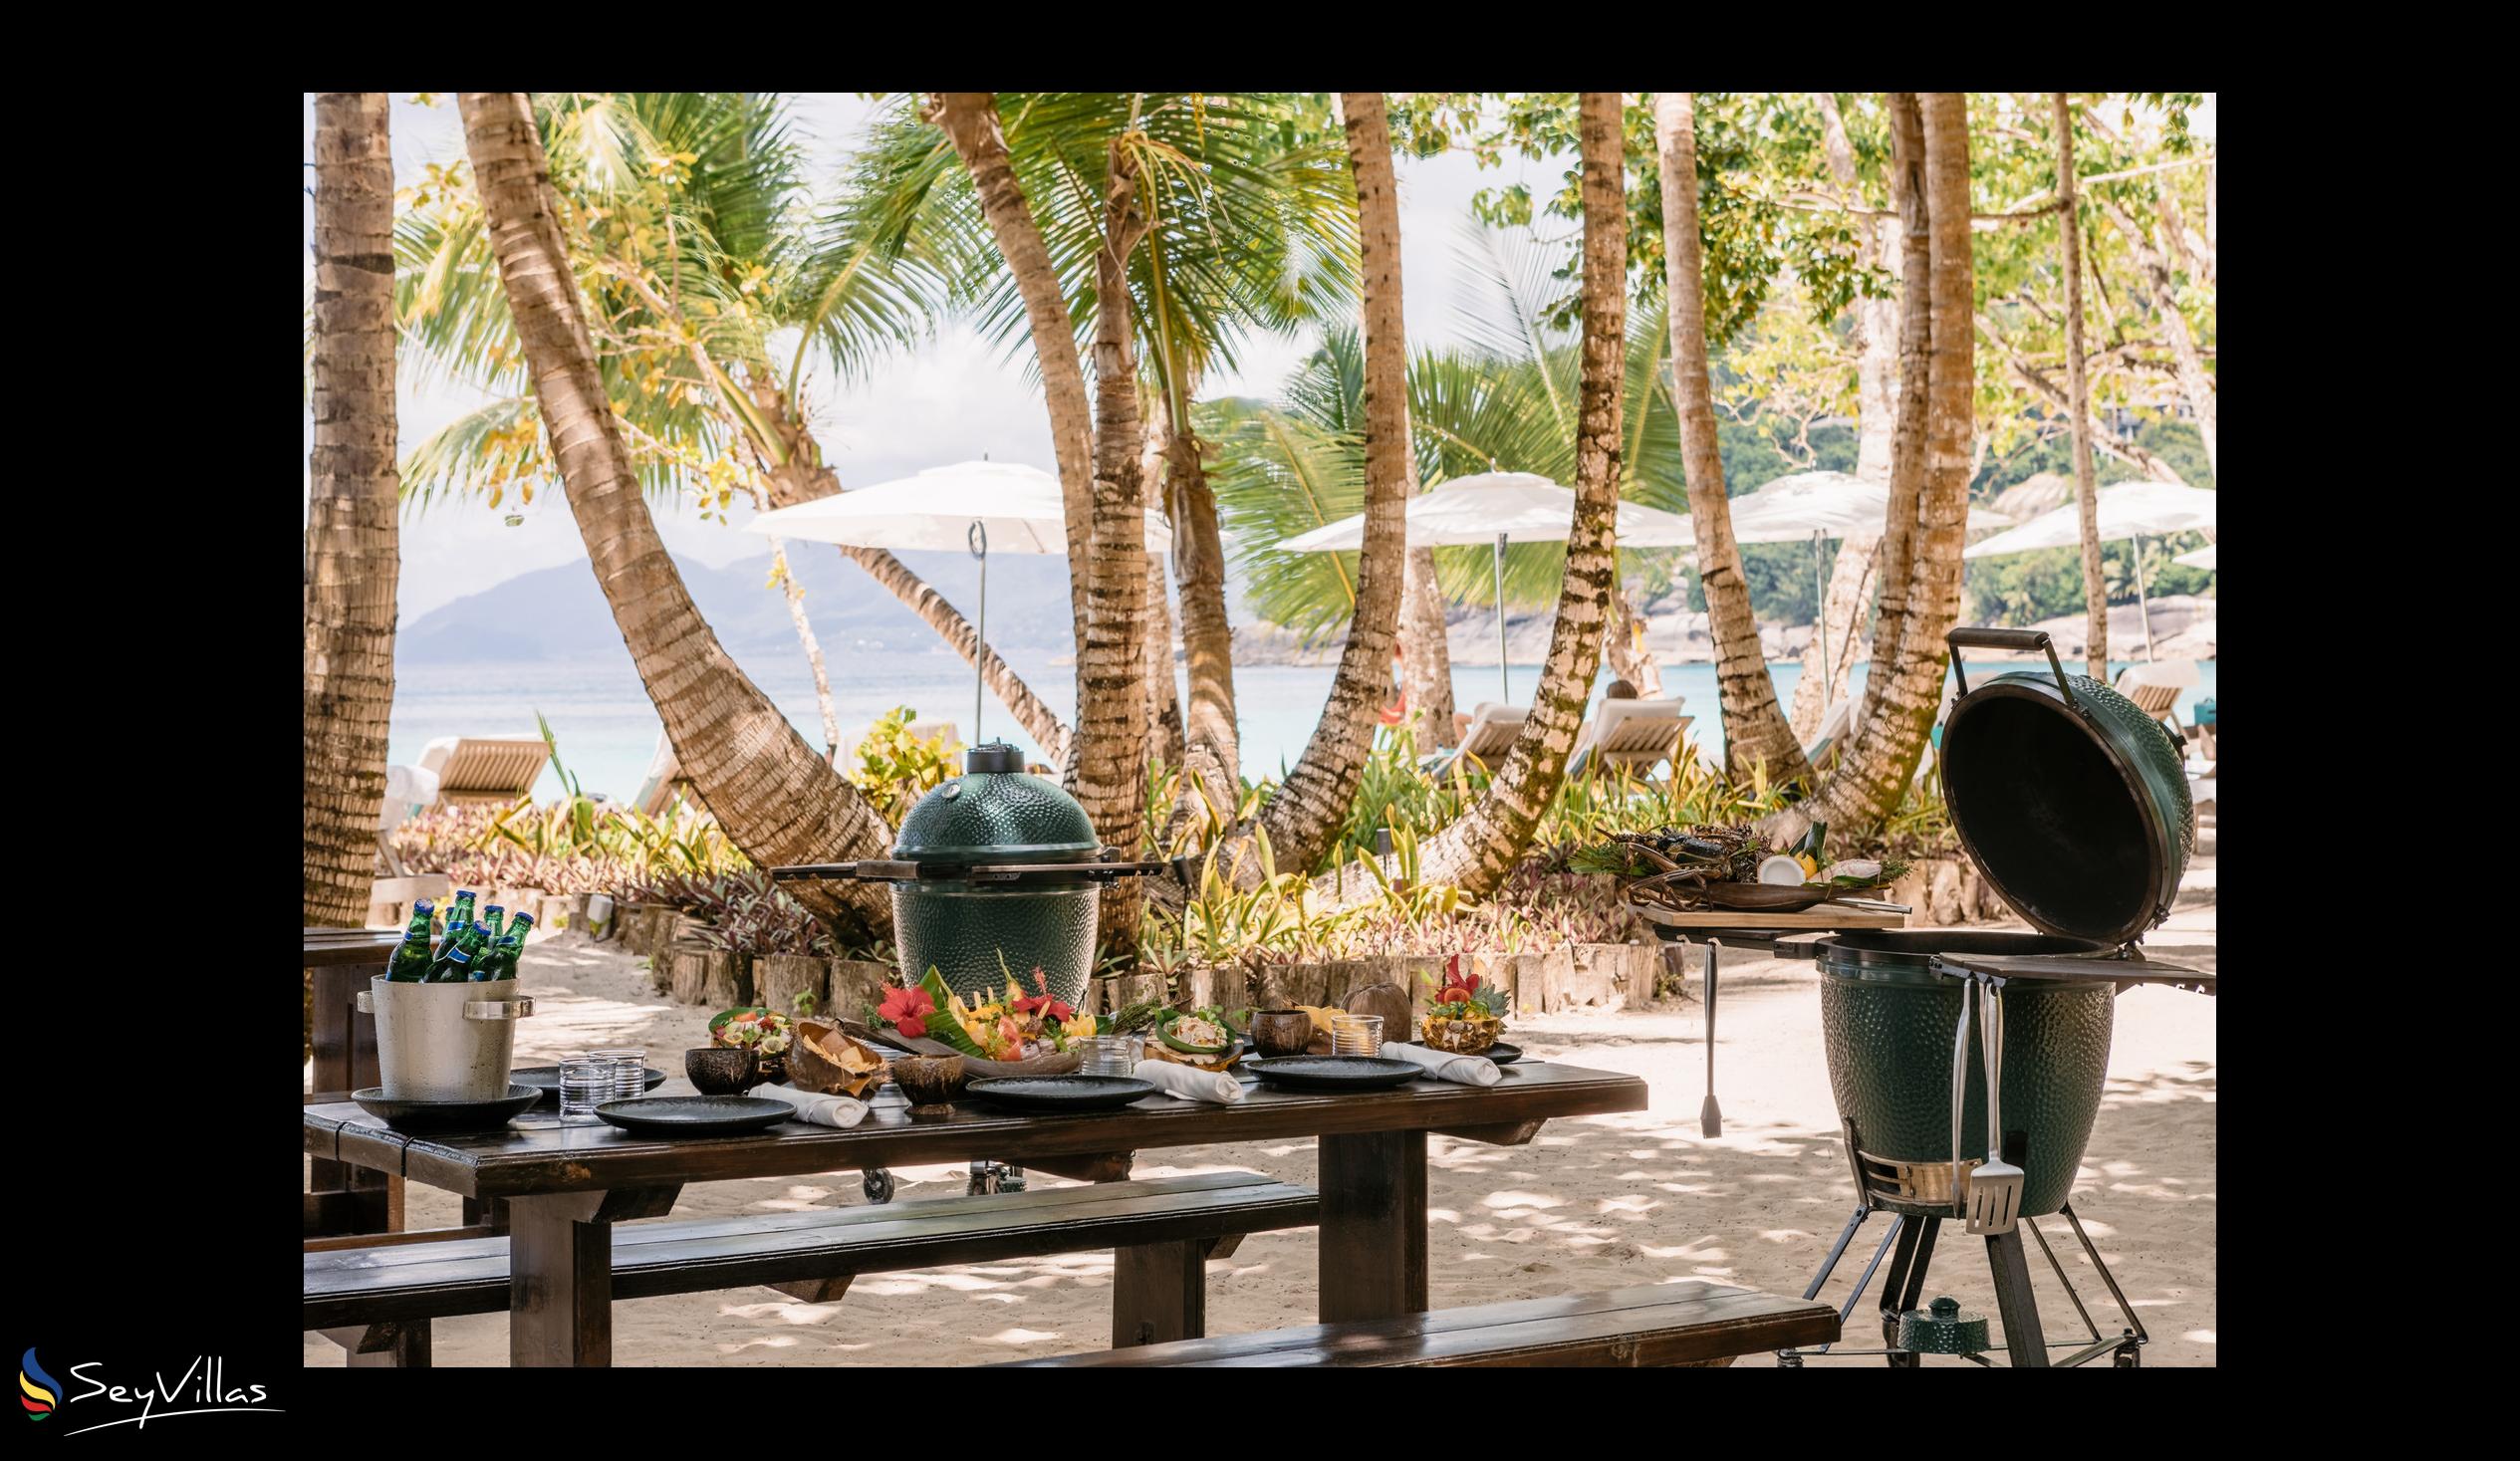 Photo 5: Four Seasons Resort - Outdoor area - Mahé (Seychelles)